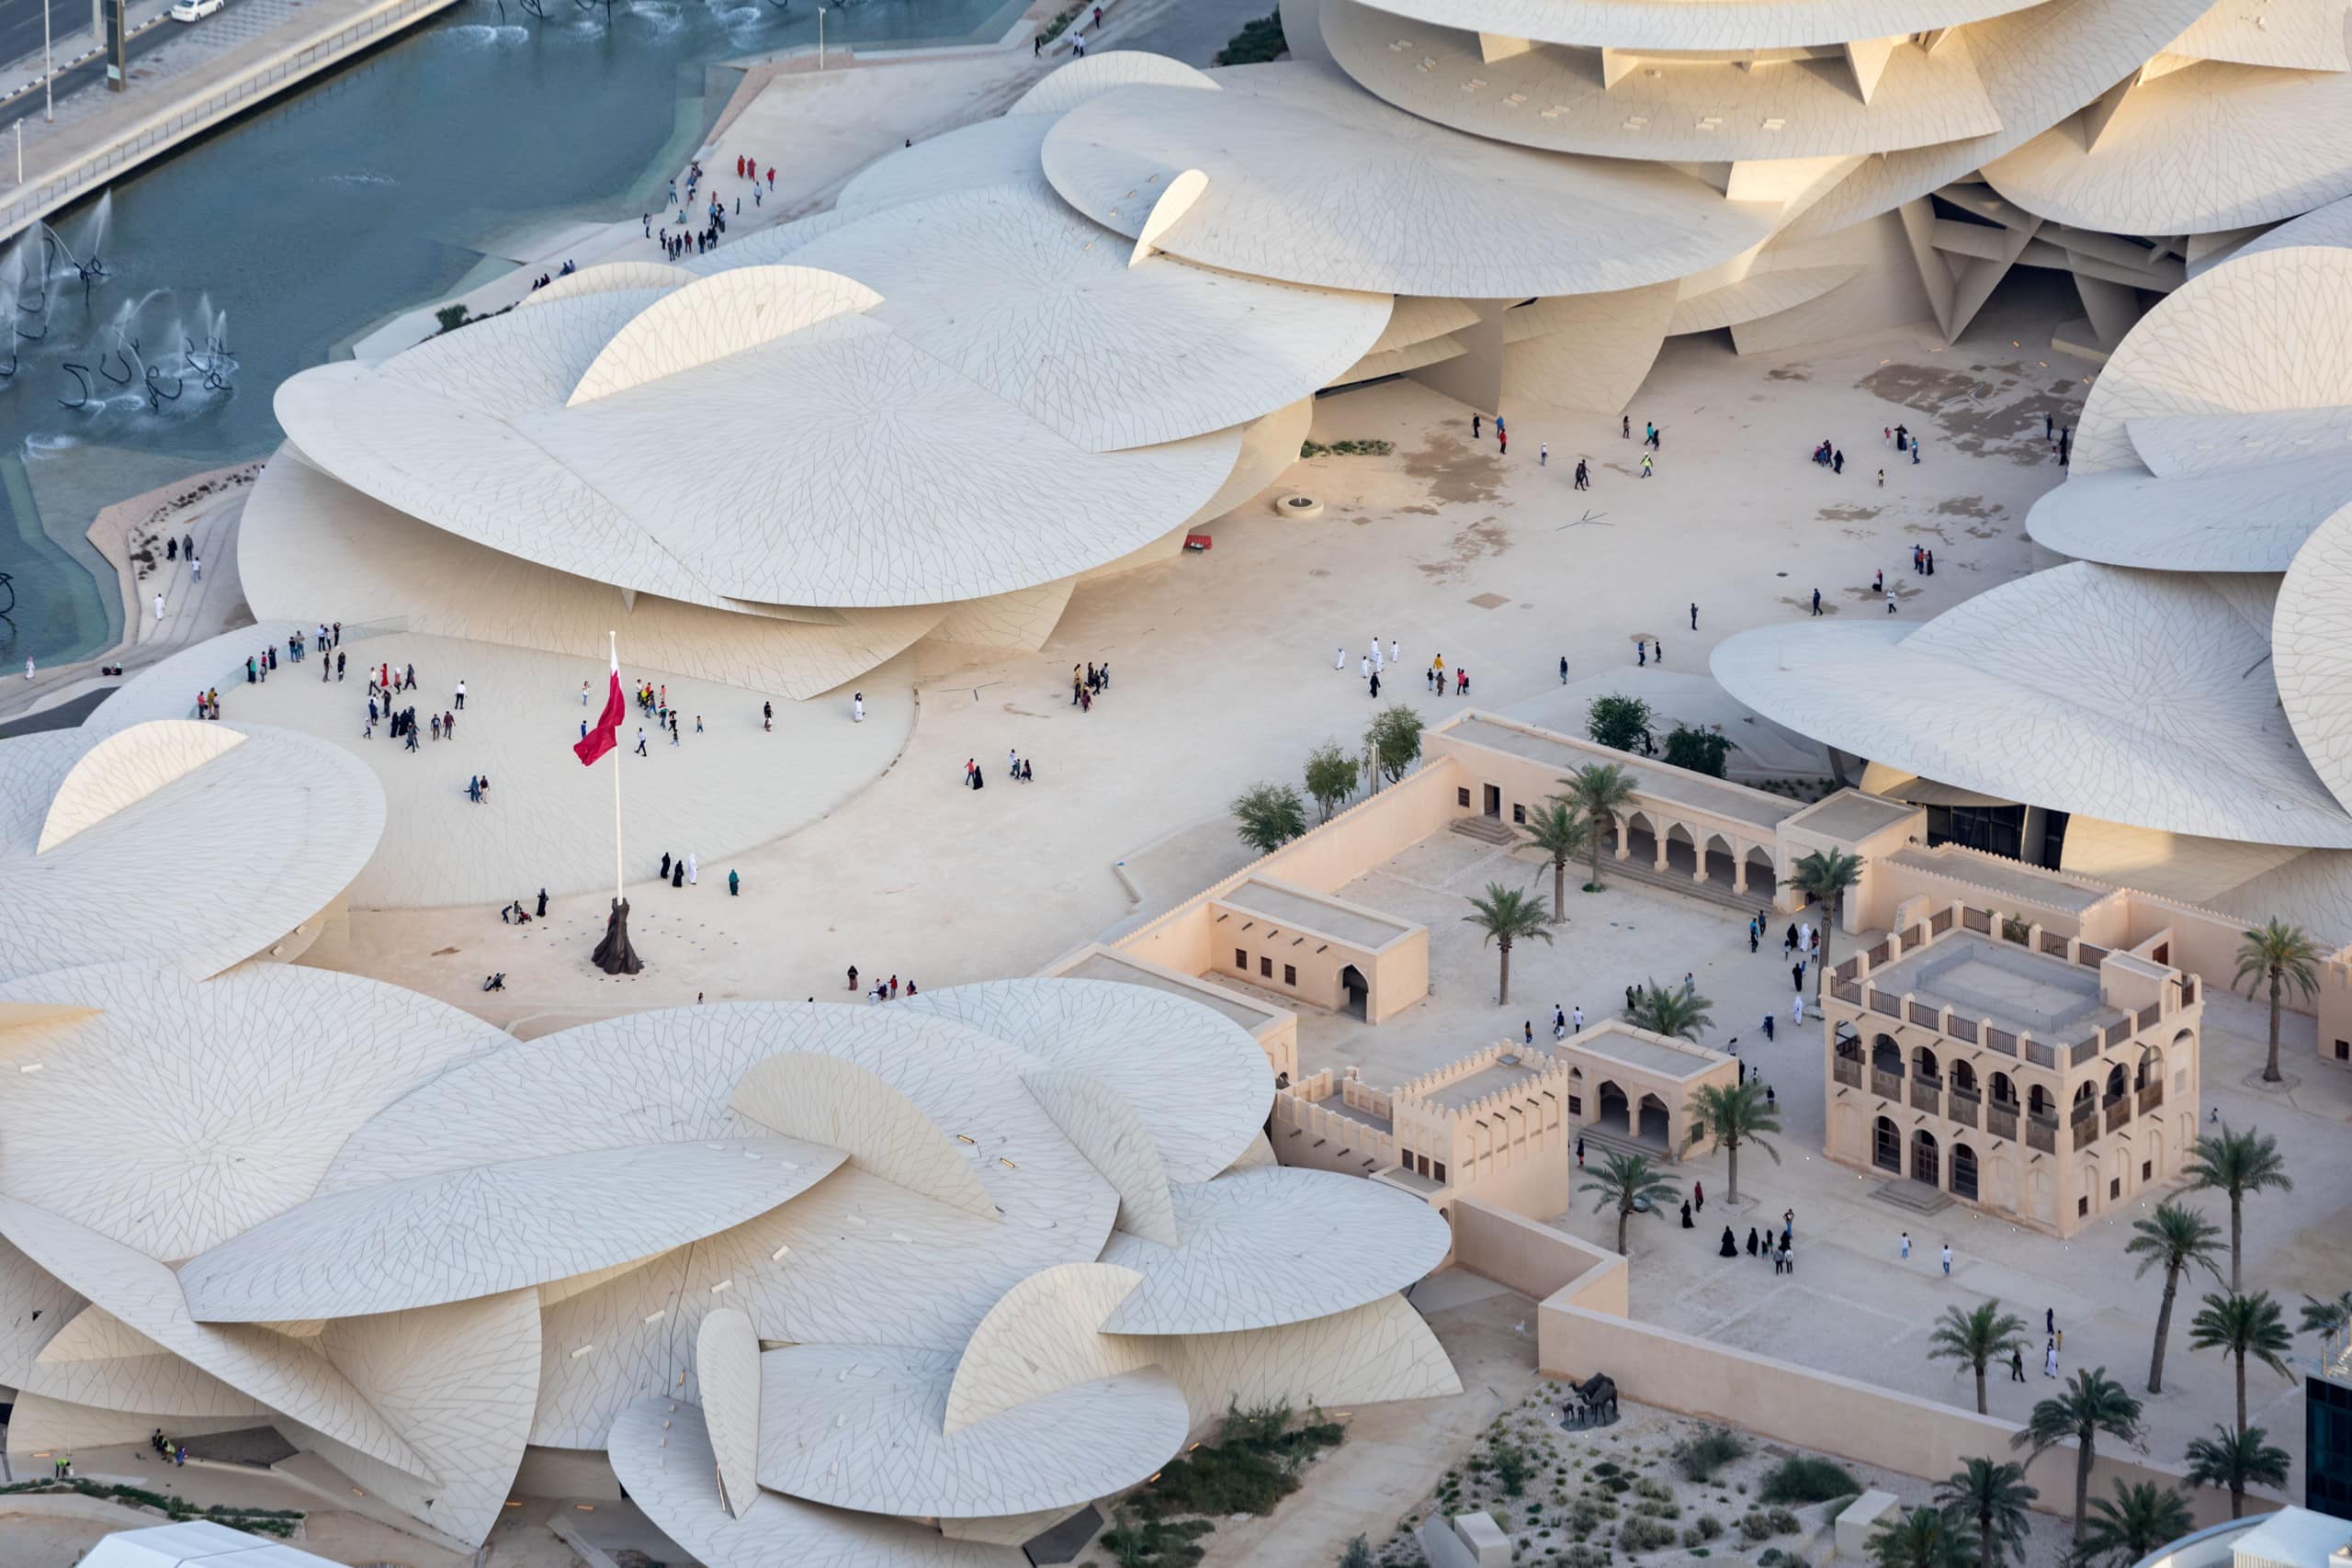 Iwan Baan, Nationalmuseum von Katar, Doha, Katar, 2019, Architektur: Ateliers Jean Nouvel © Iwan Baan / VG Bild-Kunst Bonn, 2023